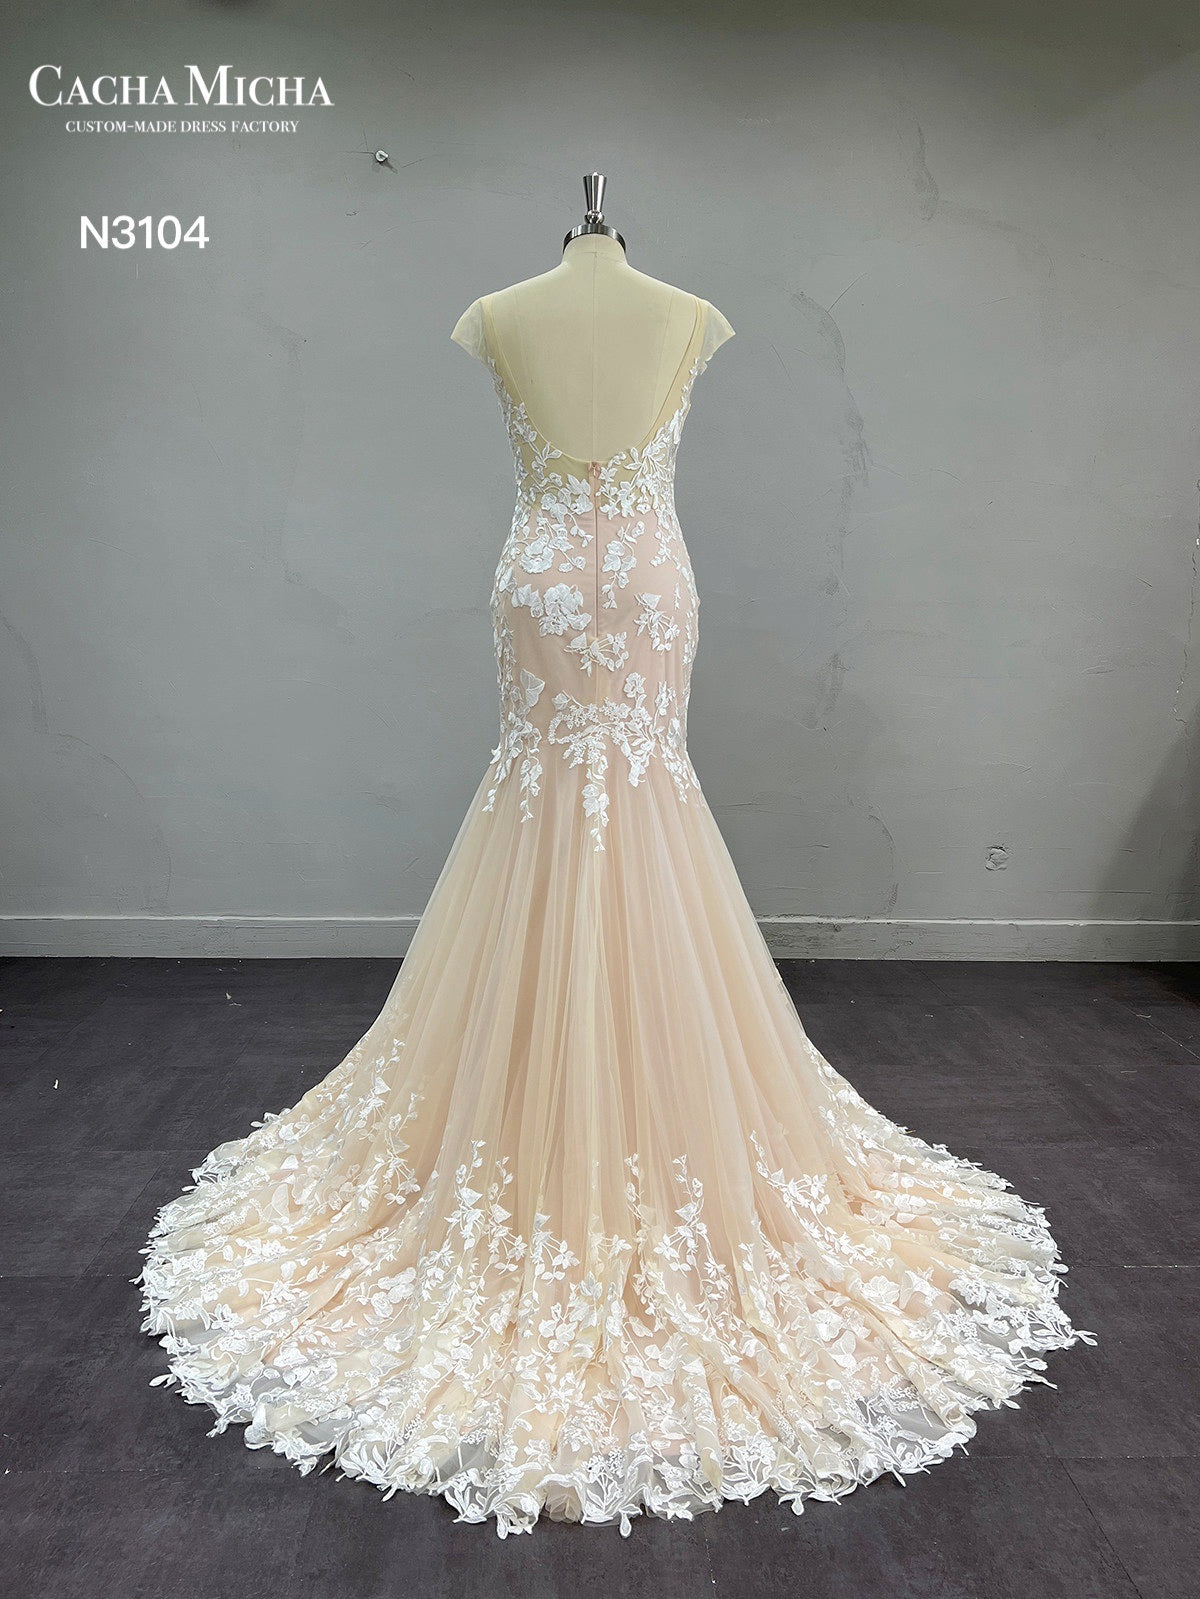 Lace Applique Blush Mermaid Wedding Dress  N3104